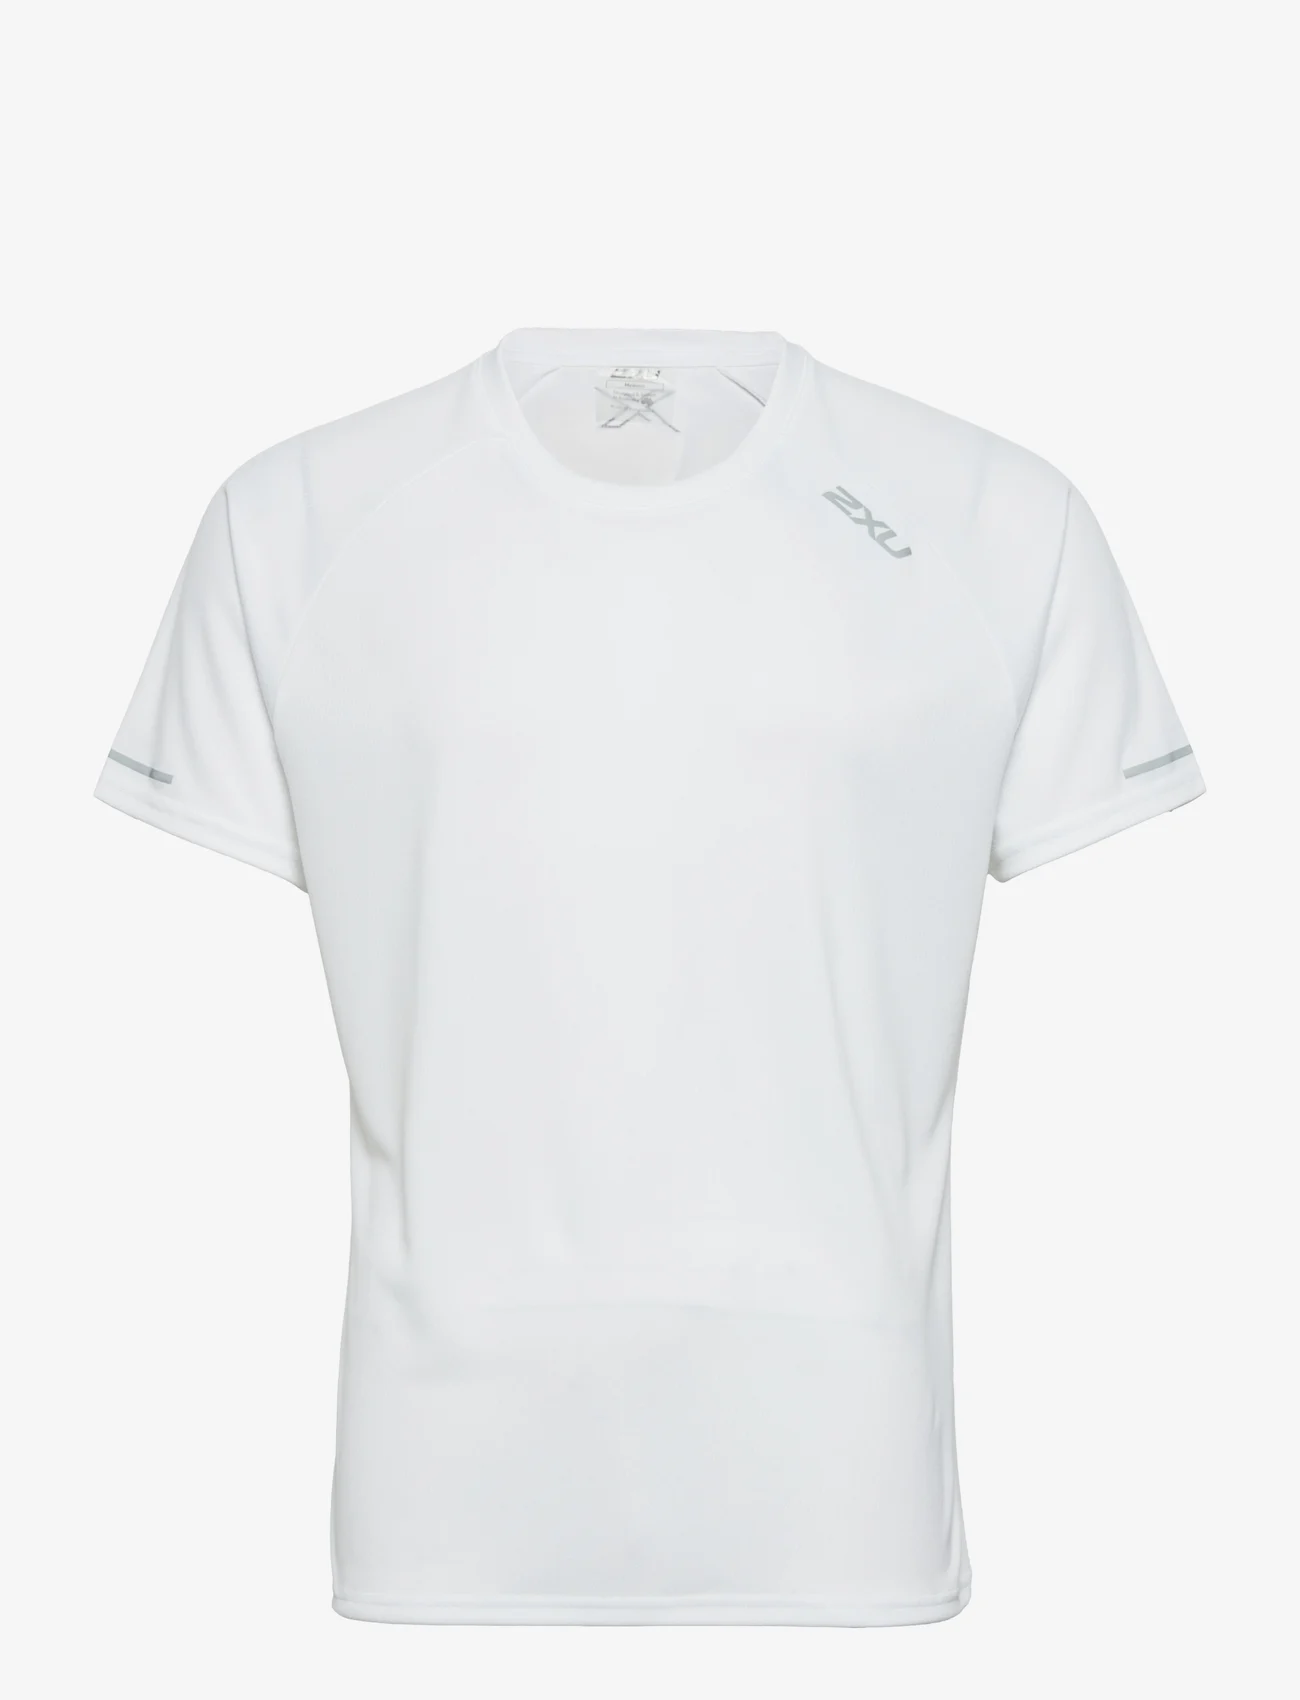 2XU - AERO TEE - t-shirts - white/silver reflective - 0